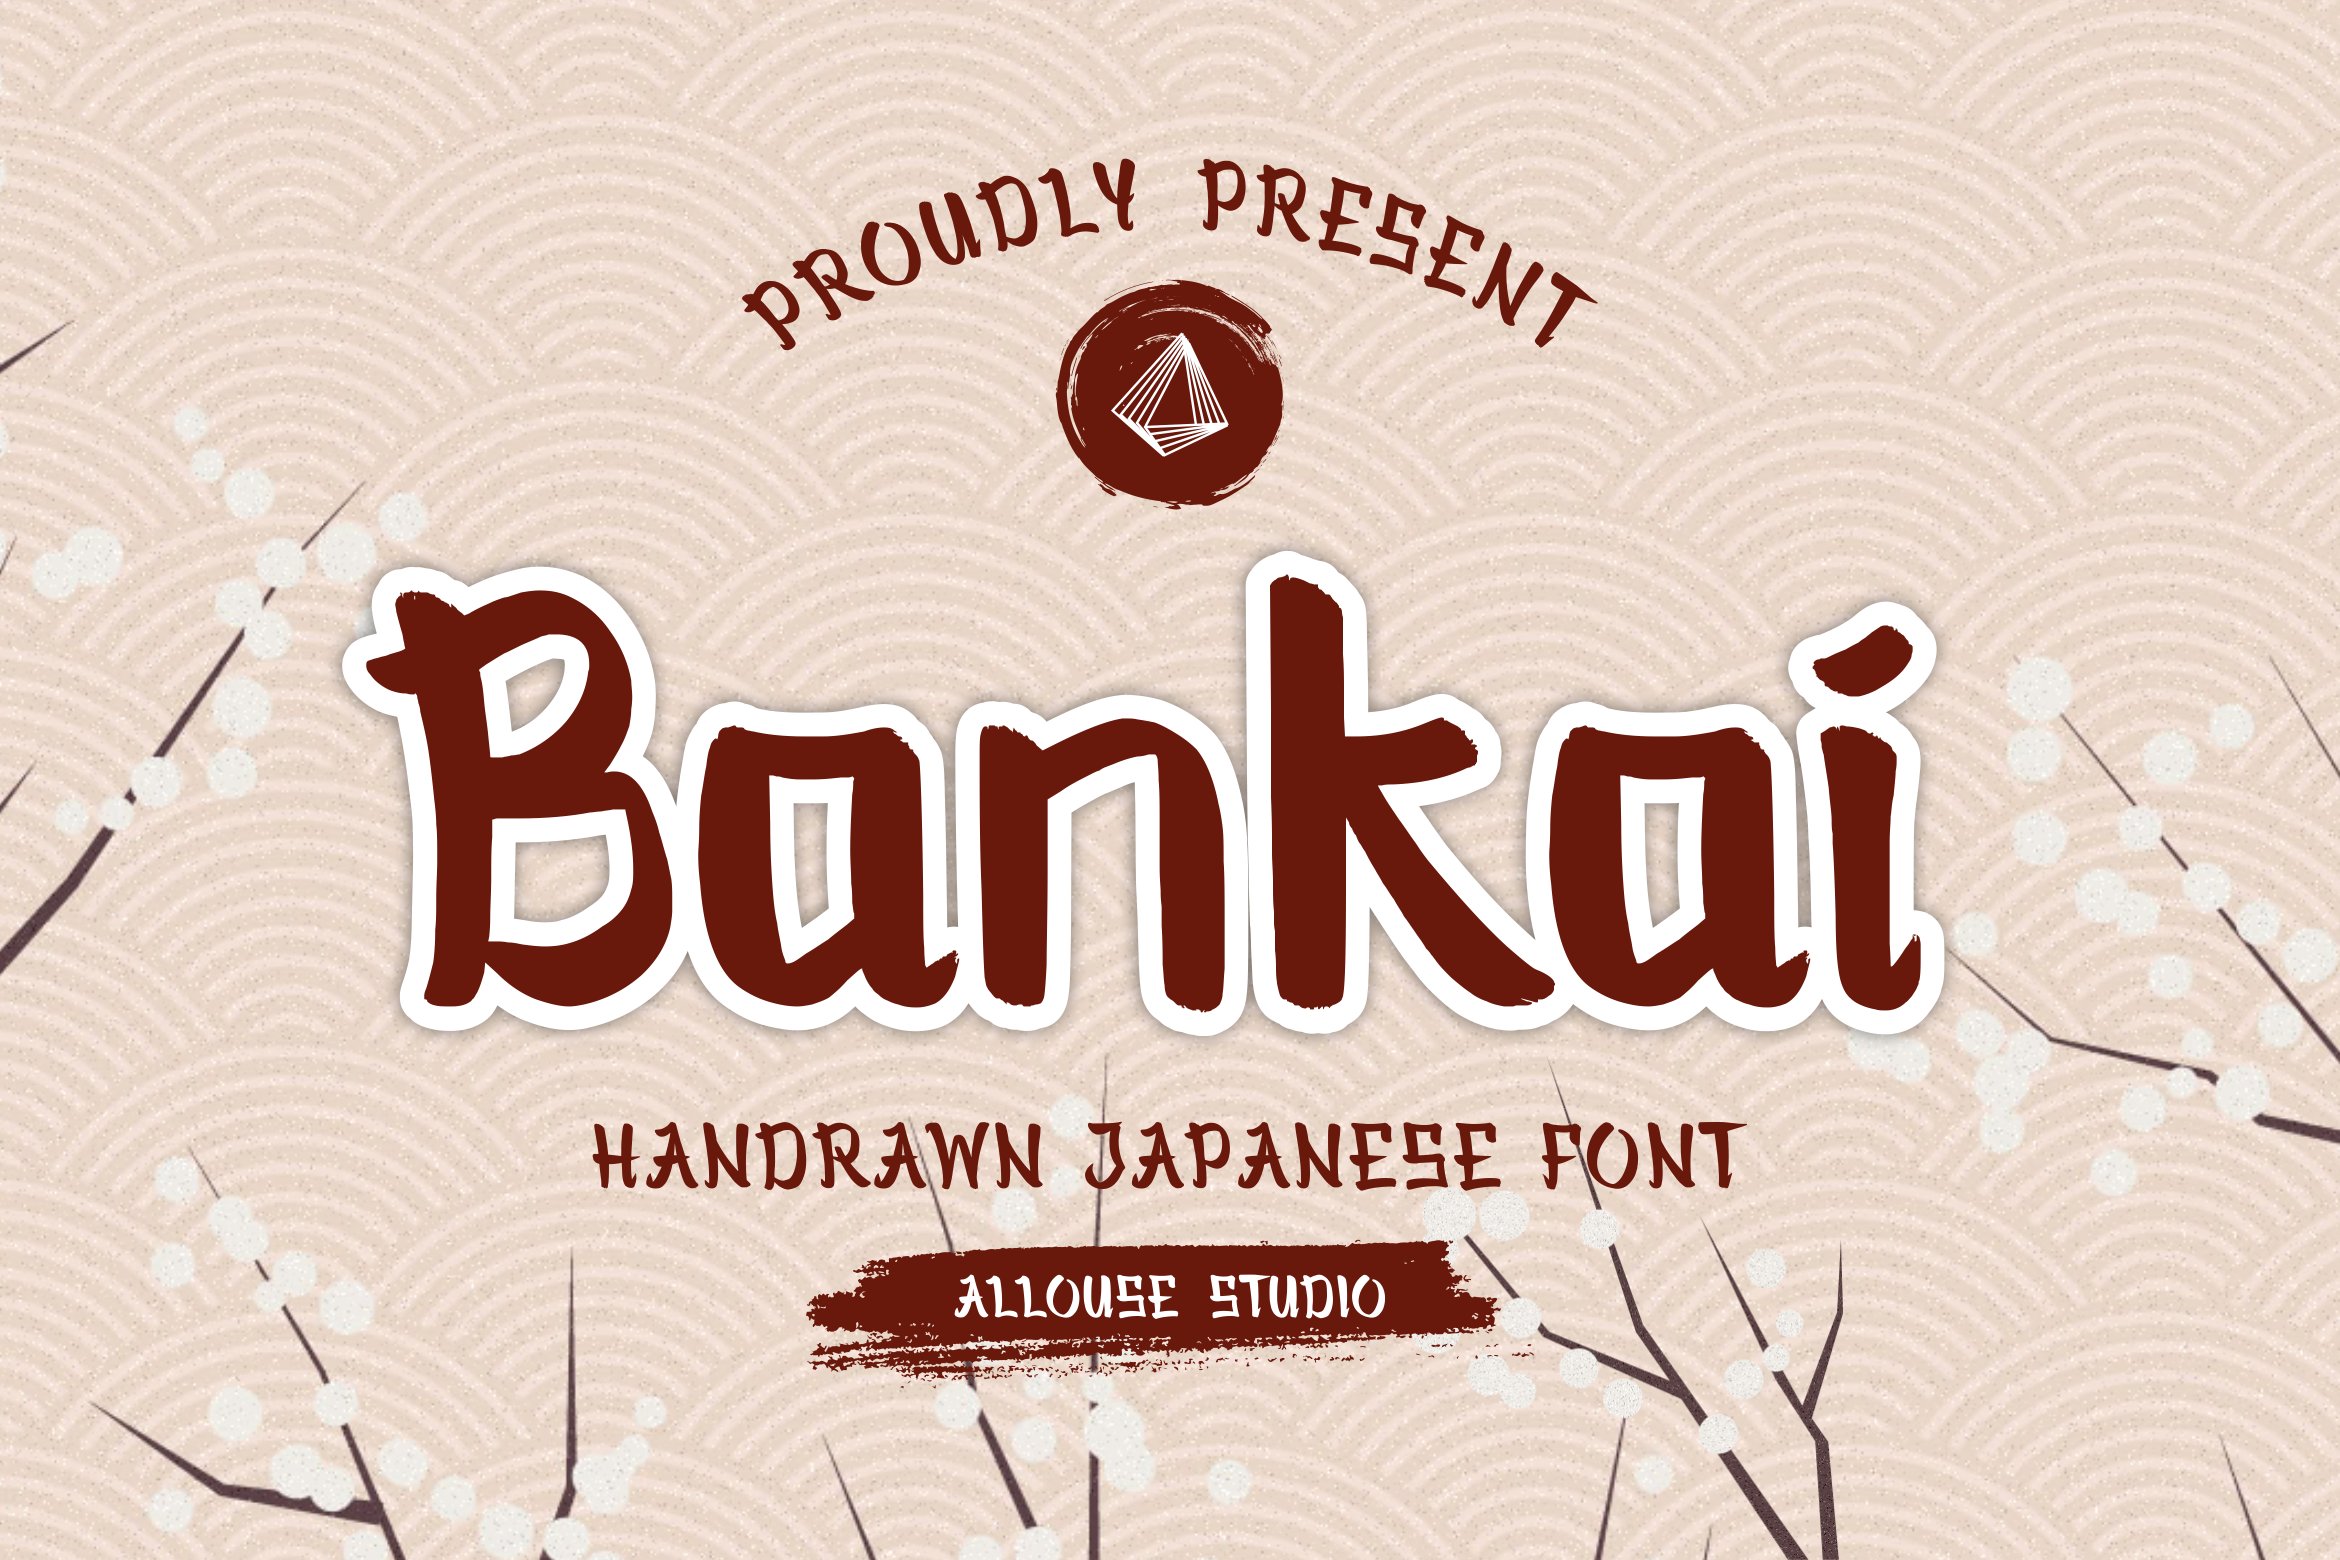 Bankai Font cover image.